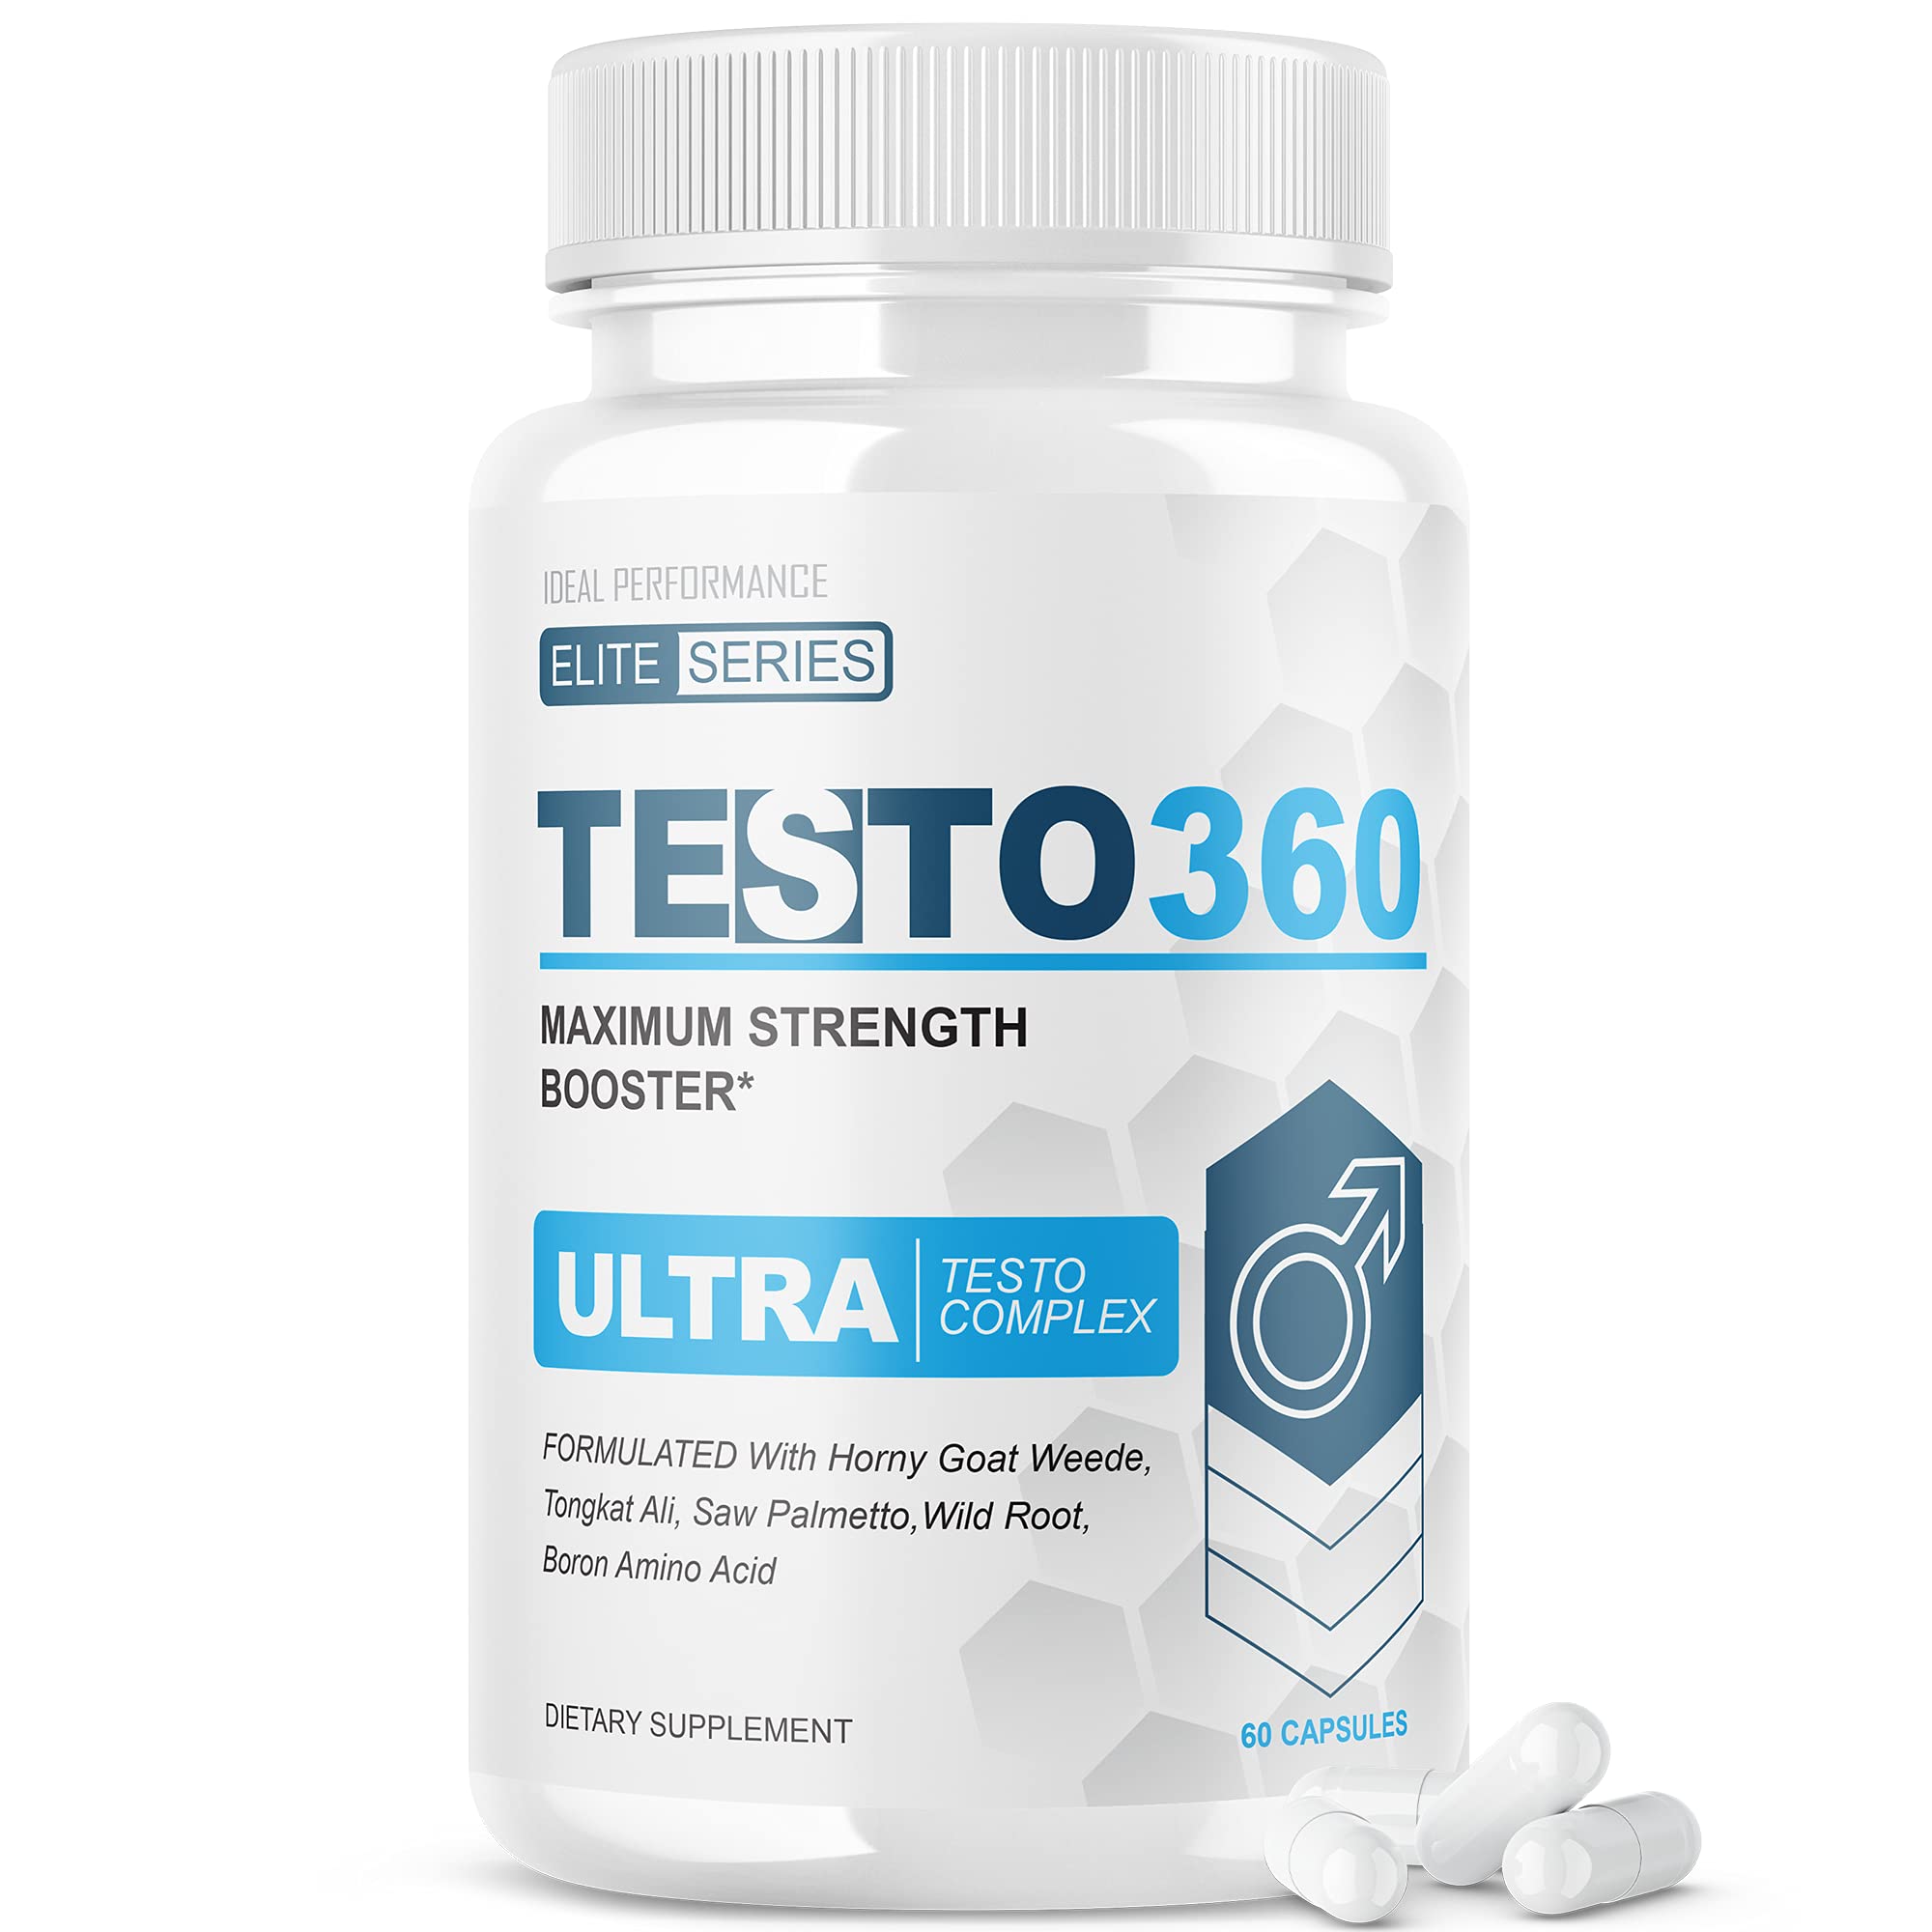 Comprar Testo 360 ultra male enhancement en Mexico, Colombia, Chile, Ecuador, Peru Costa rica, Guatemala, Venezuela, Argentina, Bolivia, Republica Dominicana